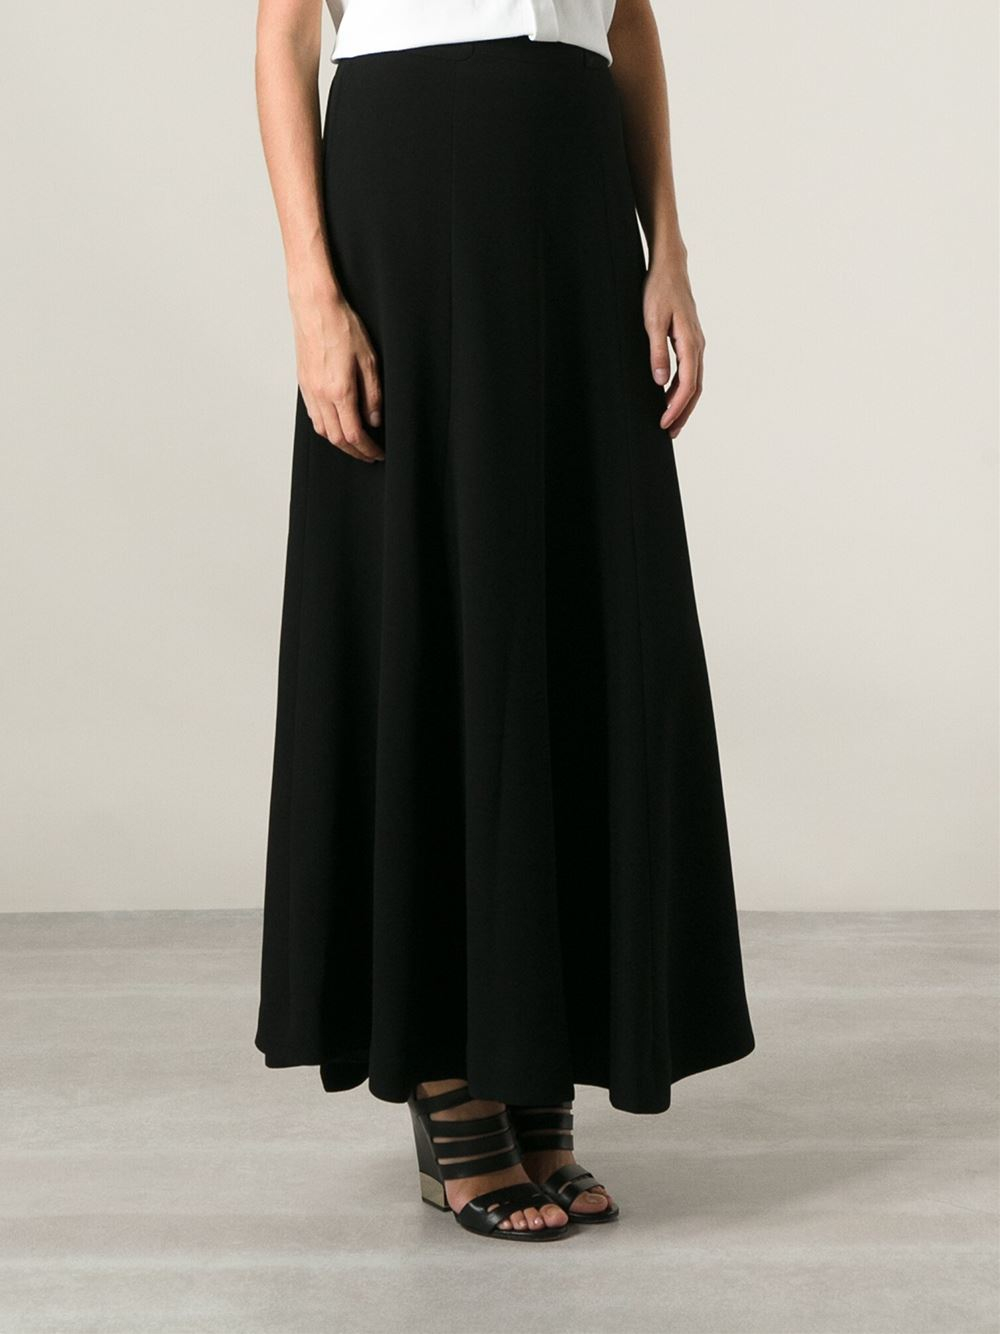 Tory burch Long A-Line Skirt in Black | Lyst